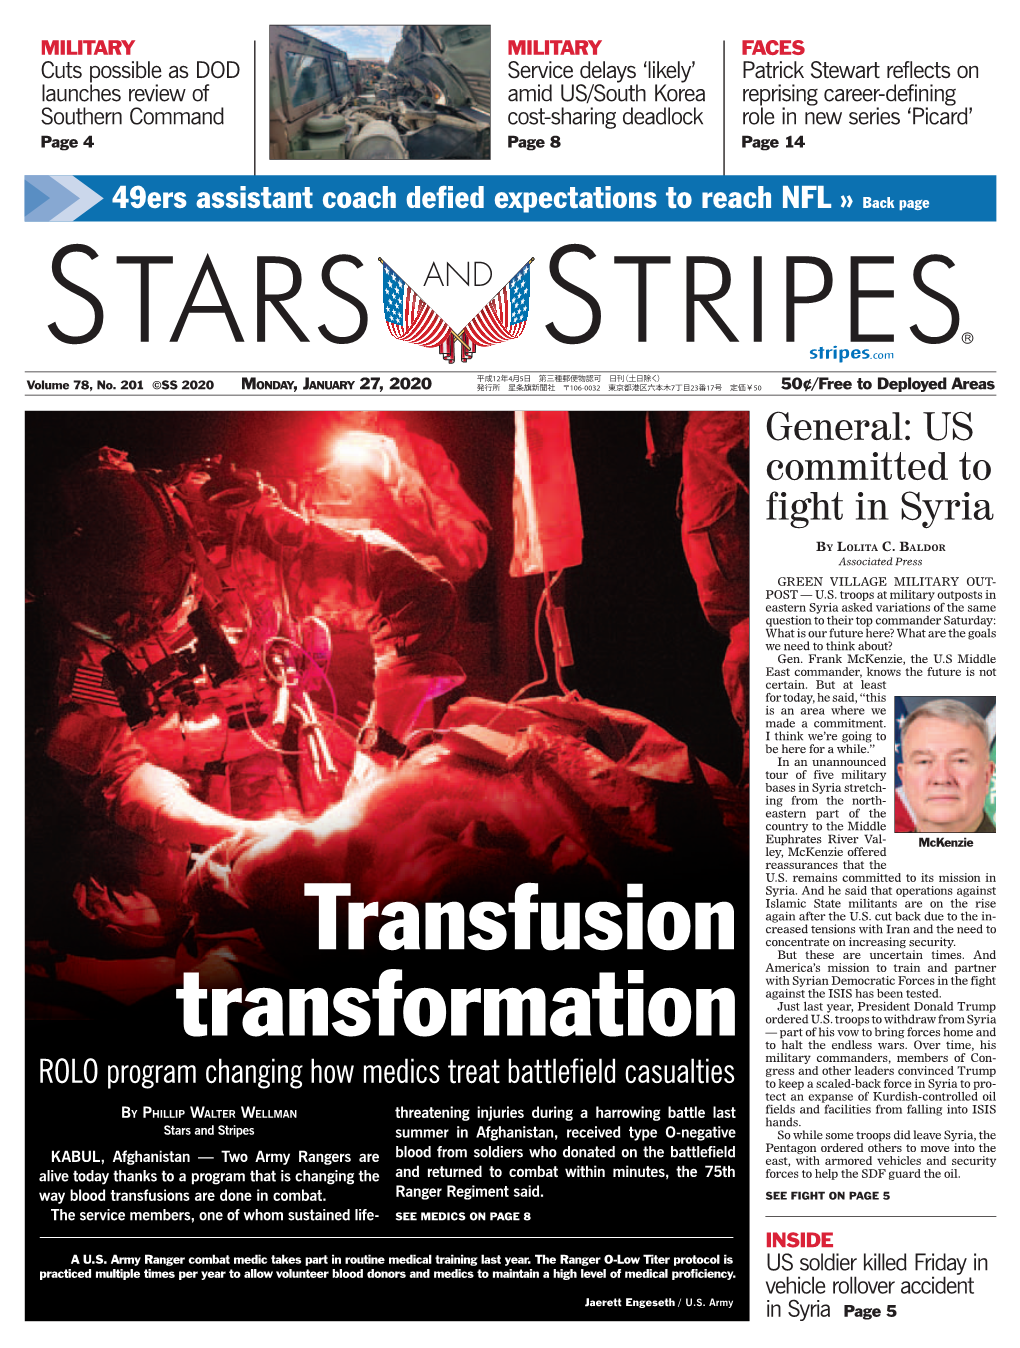 Transfusion Transformation